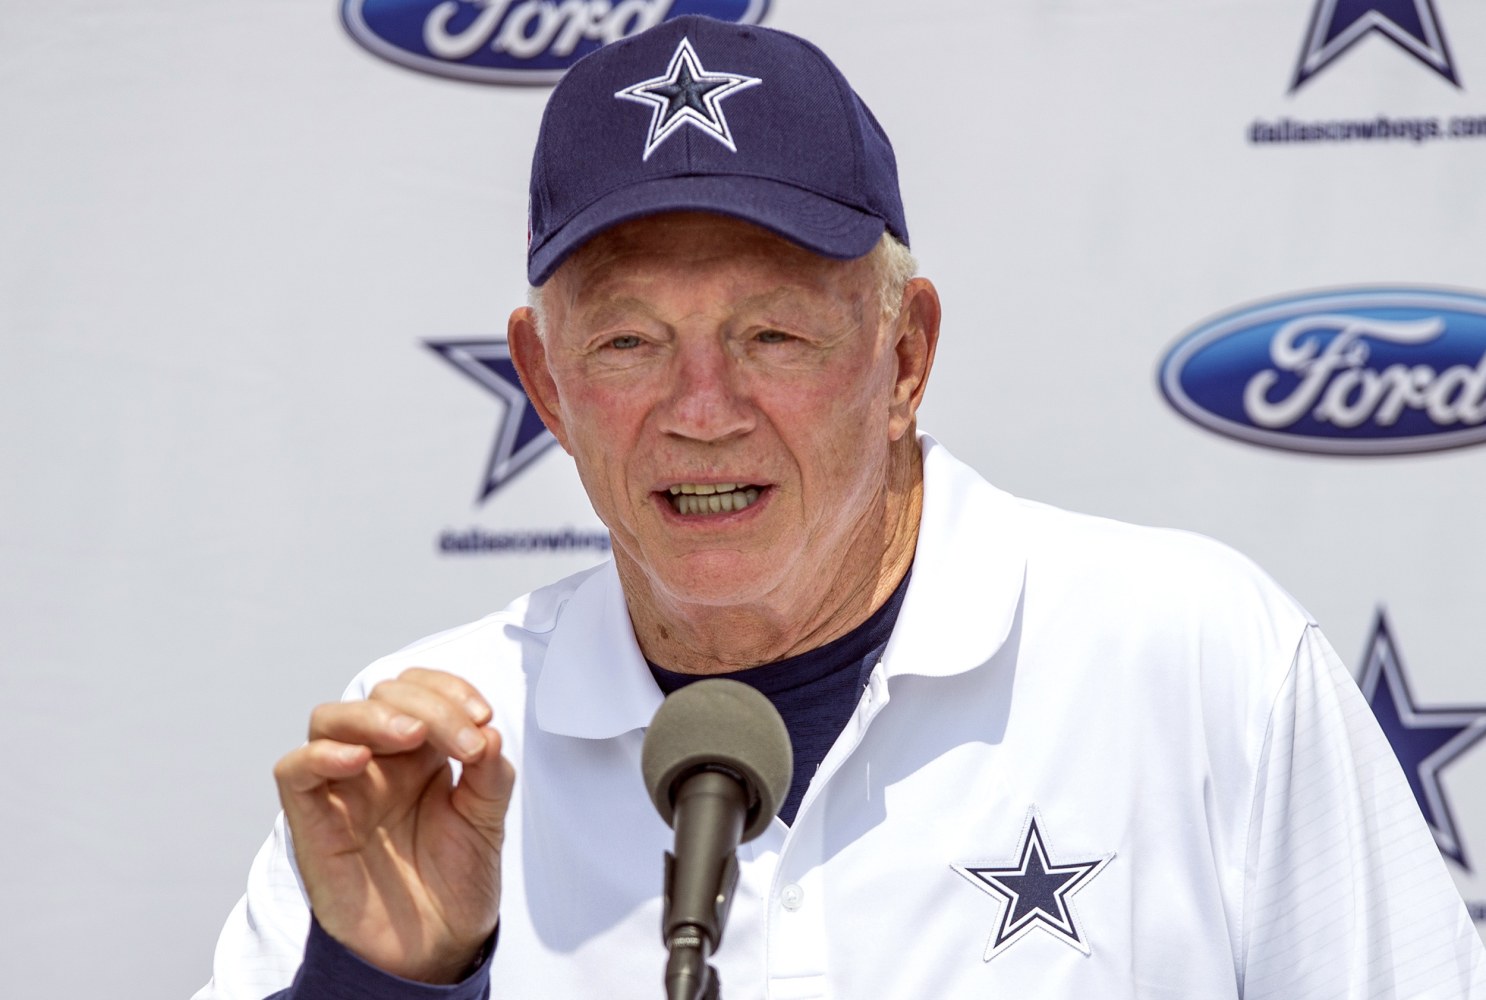 Can Cowboys Owner Jerry Jones Bench a 'Disrespectful' Player? - NBC News